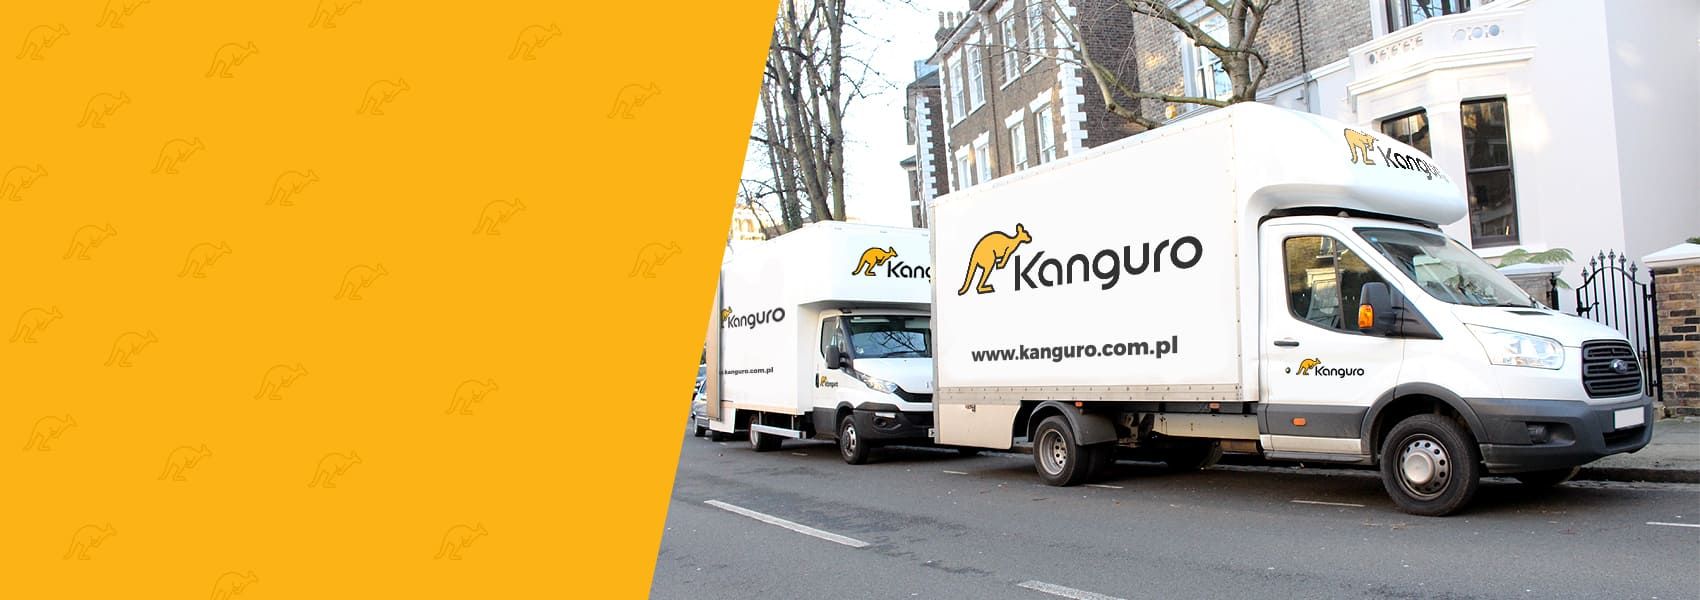 white removals truck with Kanguro logo